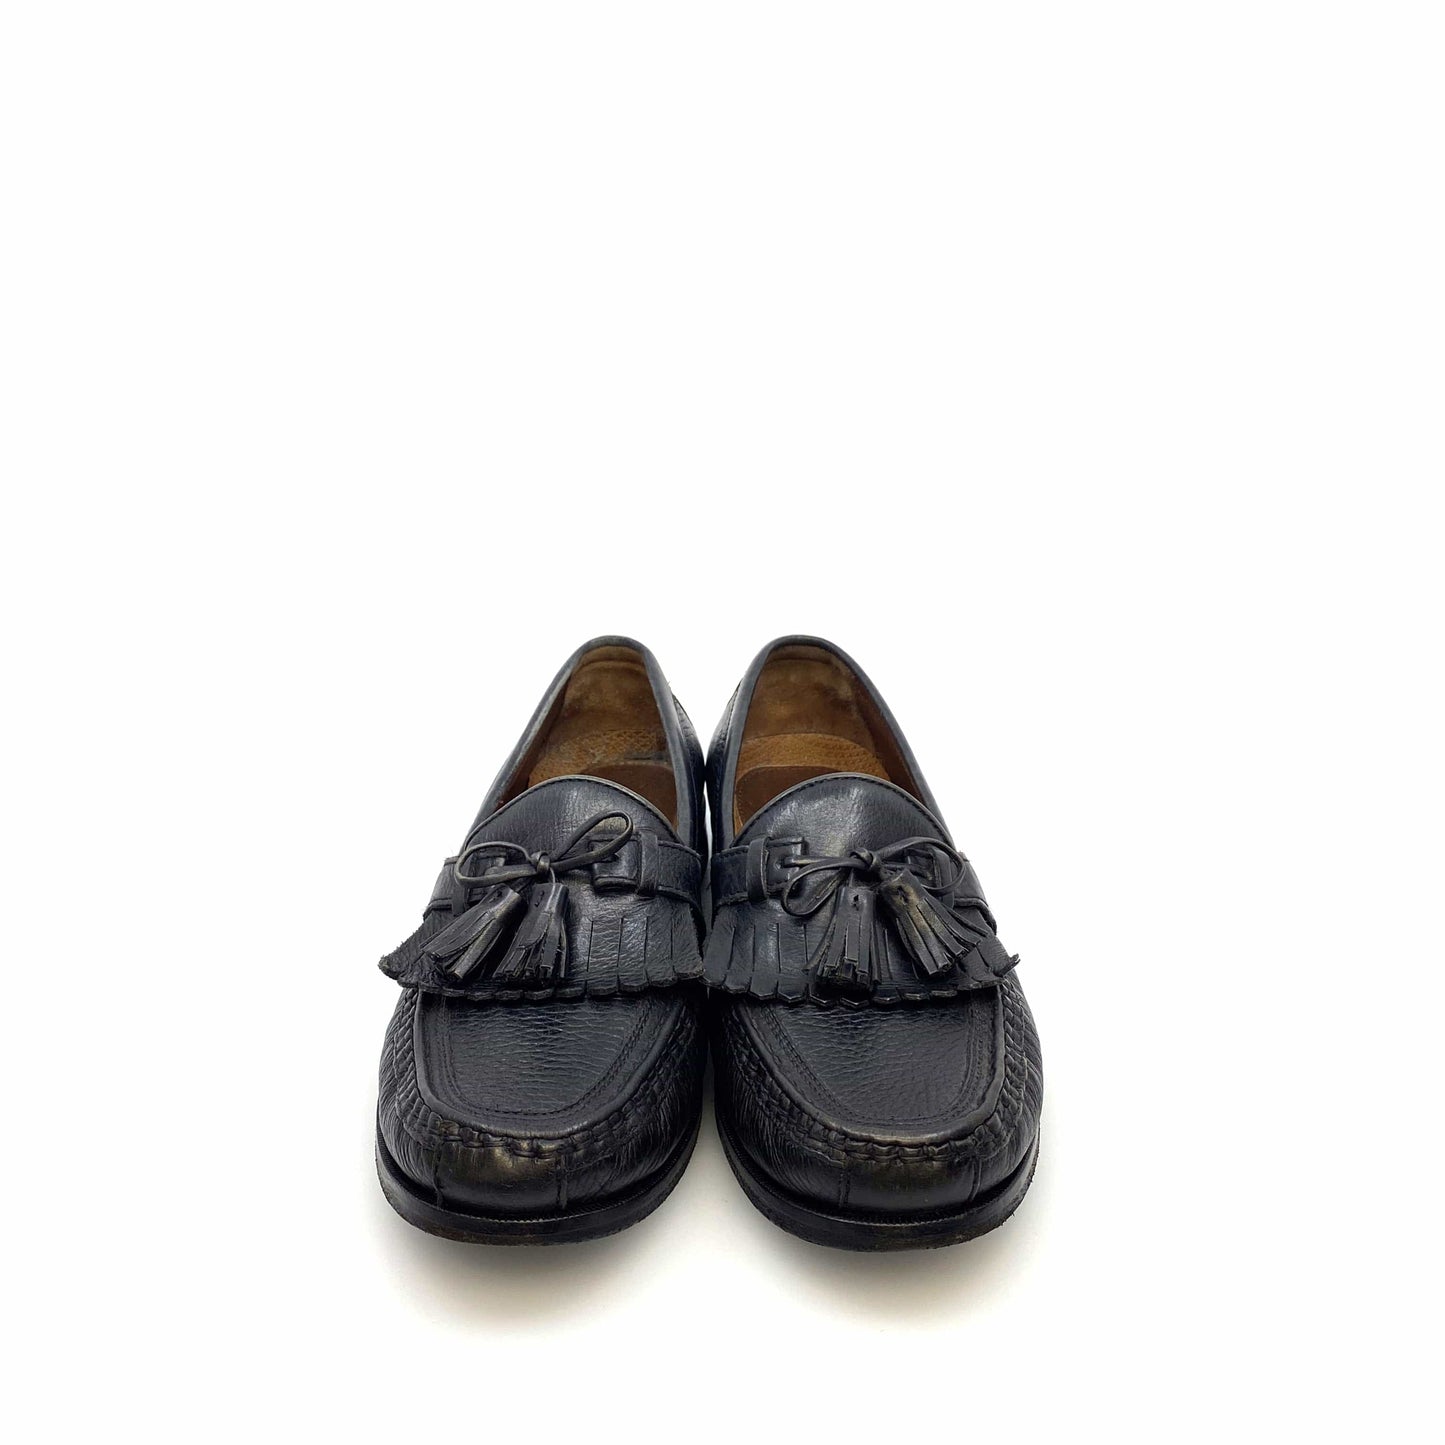 Johnston & Murphy Mens Size 7M Black Leather Kiltie Tassel Loafers